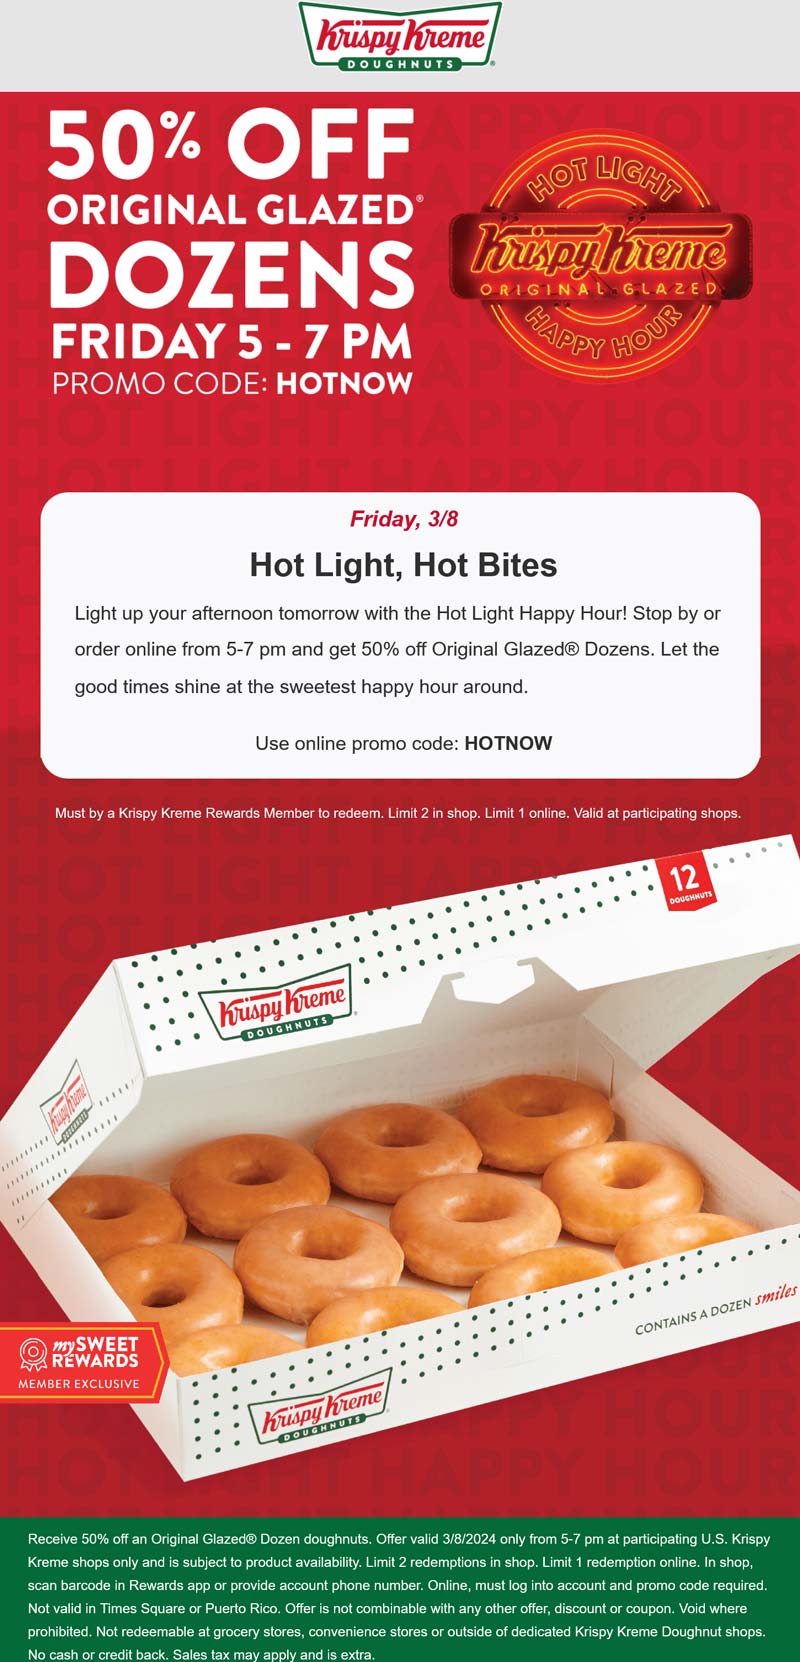 Krispy Kreme restaurants Coupon  50% off glazed dozen doughnuts 5-7p today at Krispy Kreme, or online via promo code HOTNOW #krispykreme 